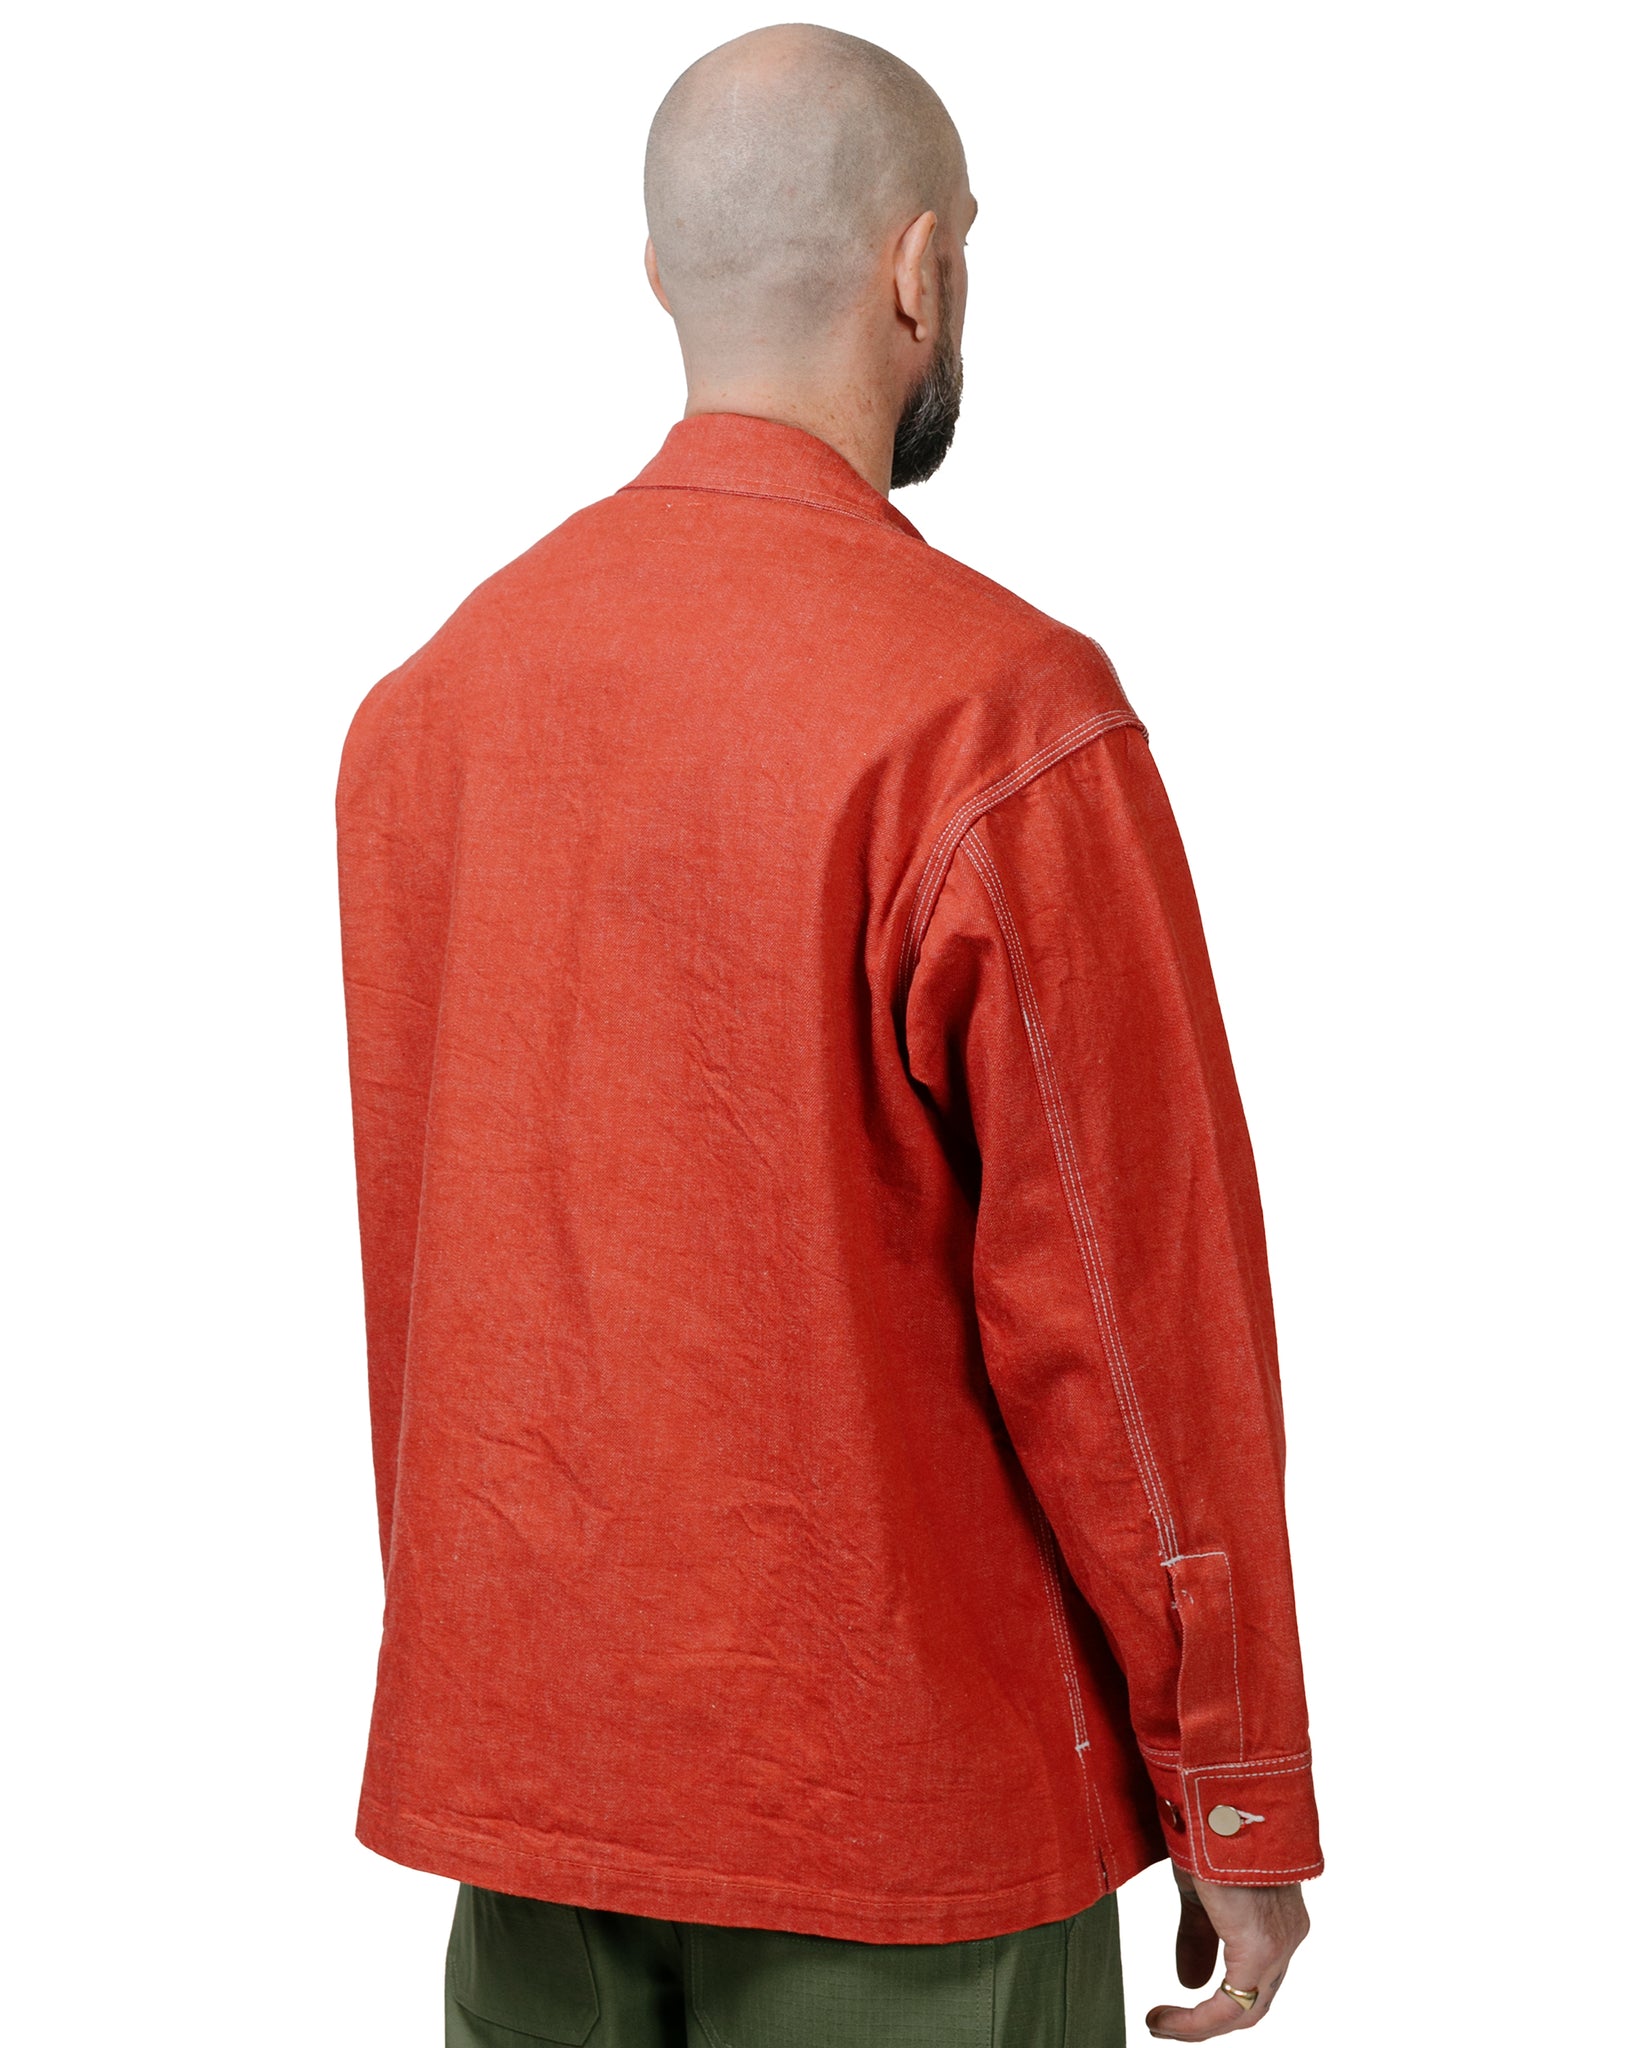 Randy's Garments Over Shirt 13.75oz Laundered Uncut Selvedge Denim Red model back